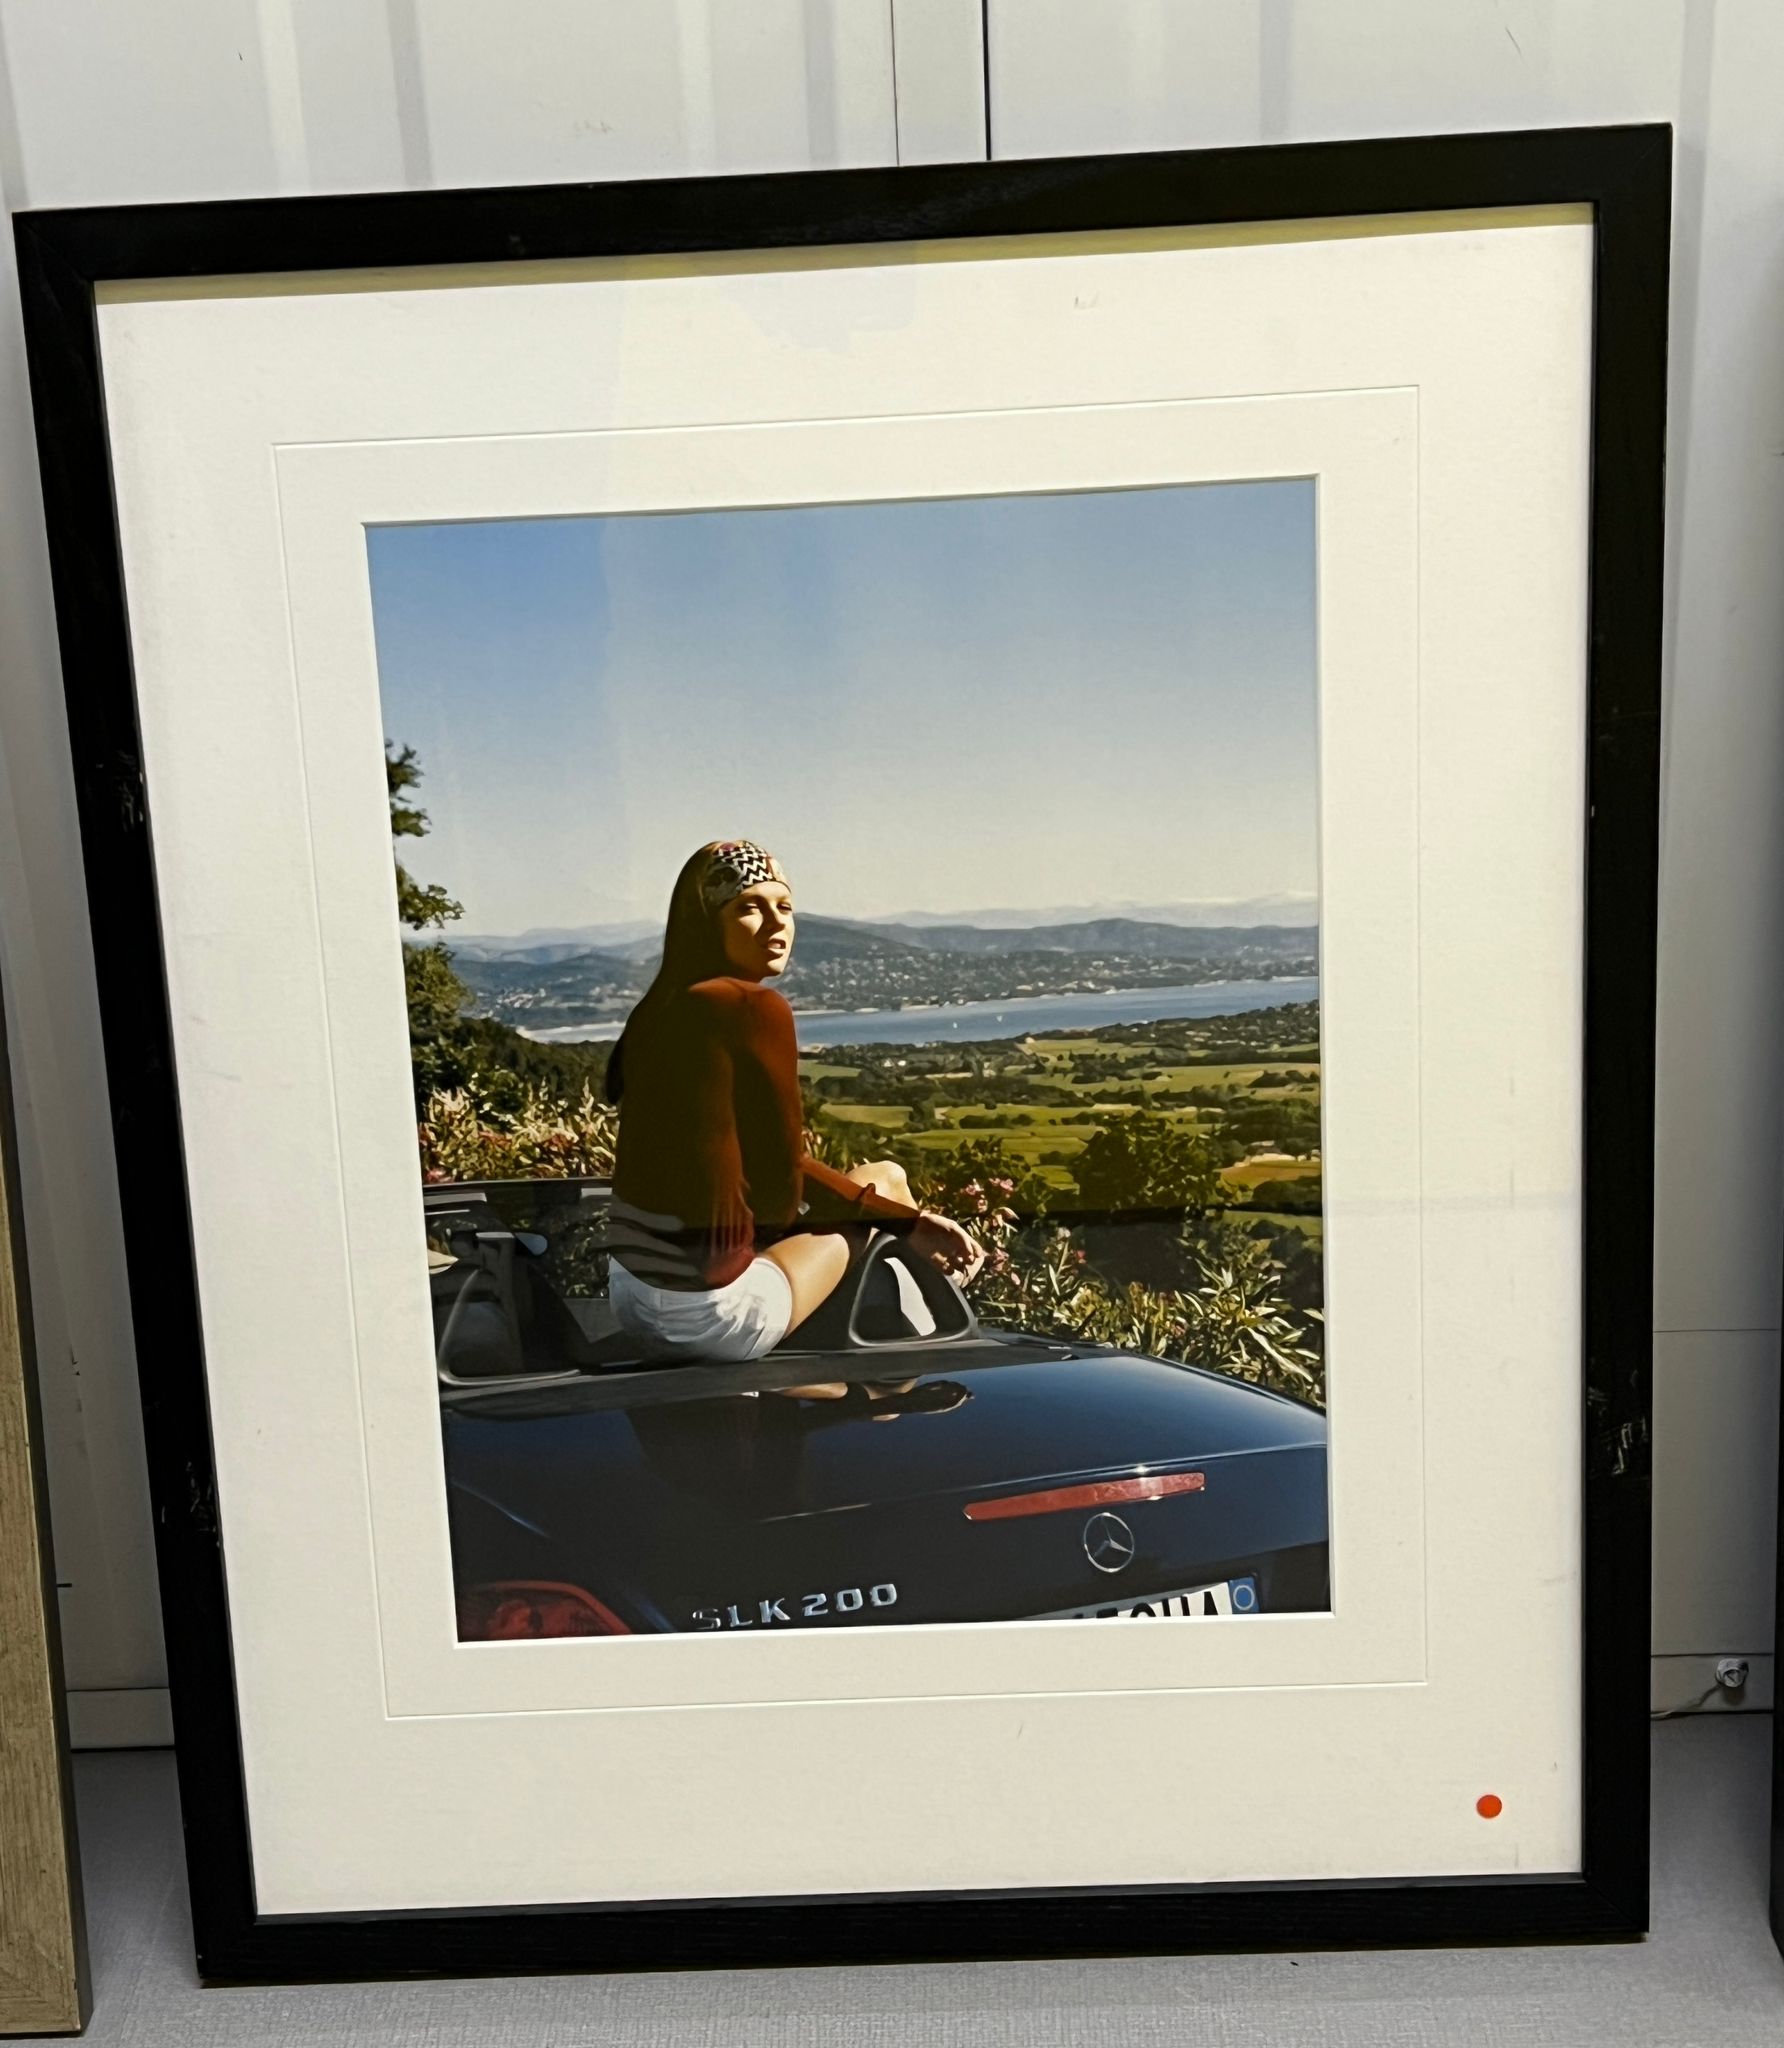 Framed photograph of a lady sat on a Mercedes SLK 2000 (Framed size 48cm x 58cm)